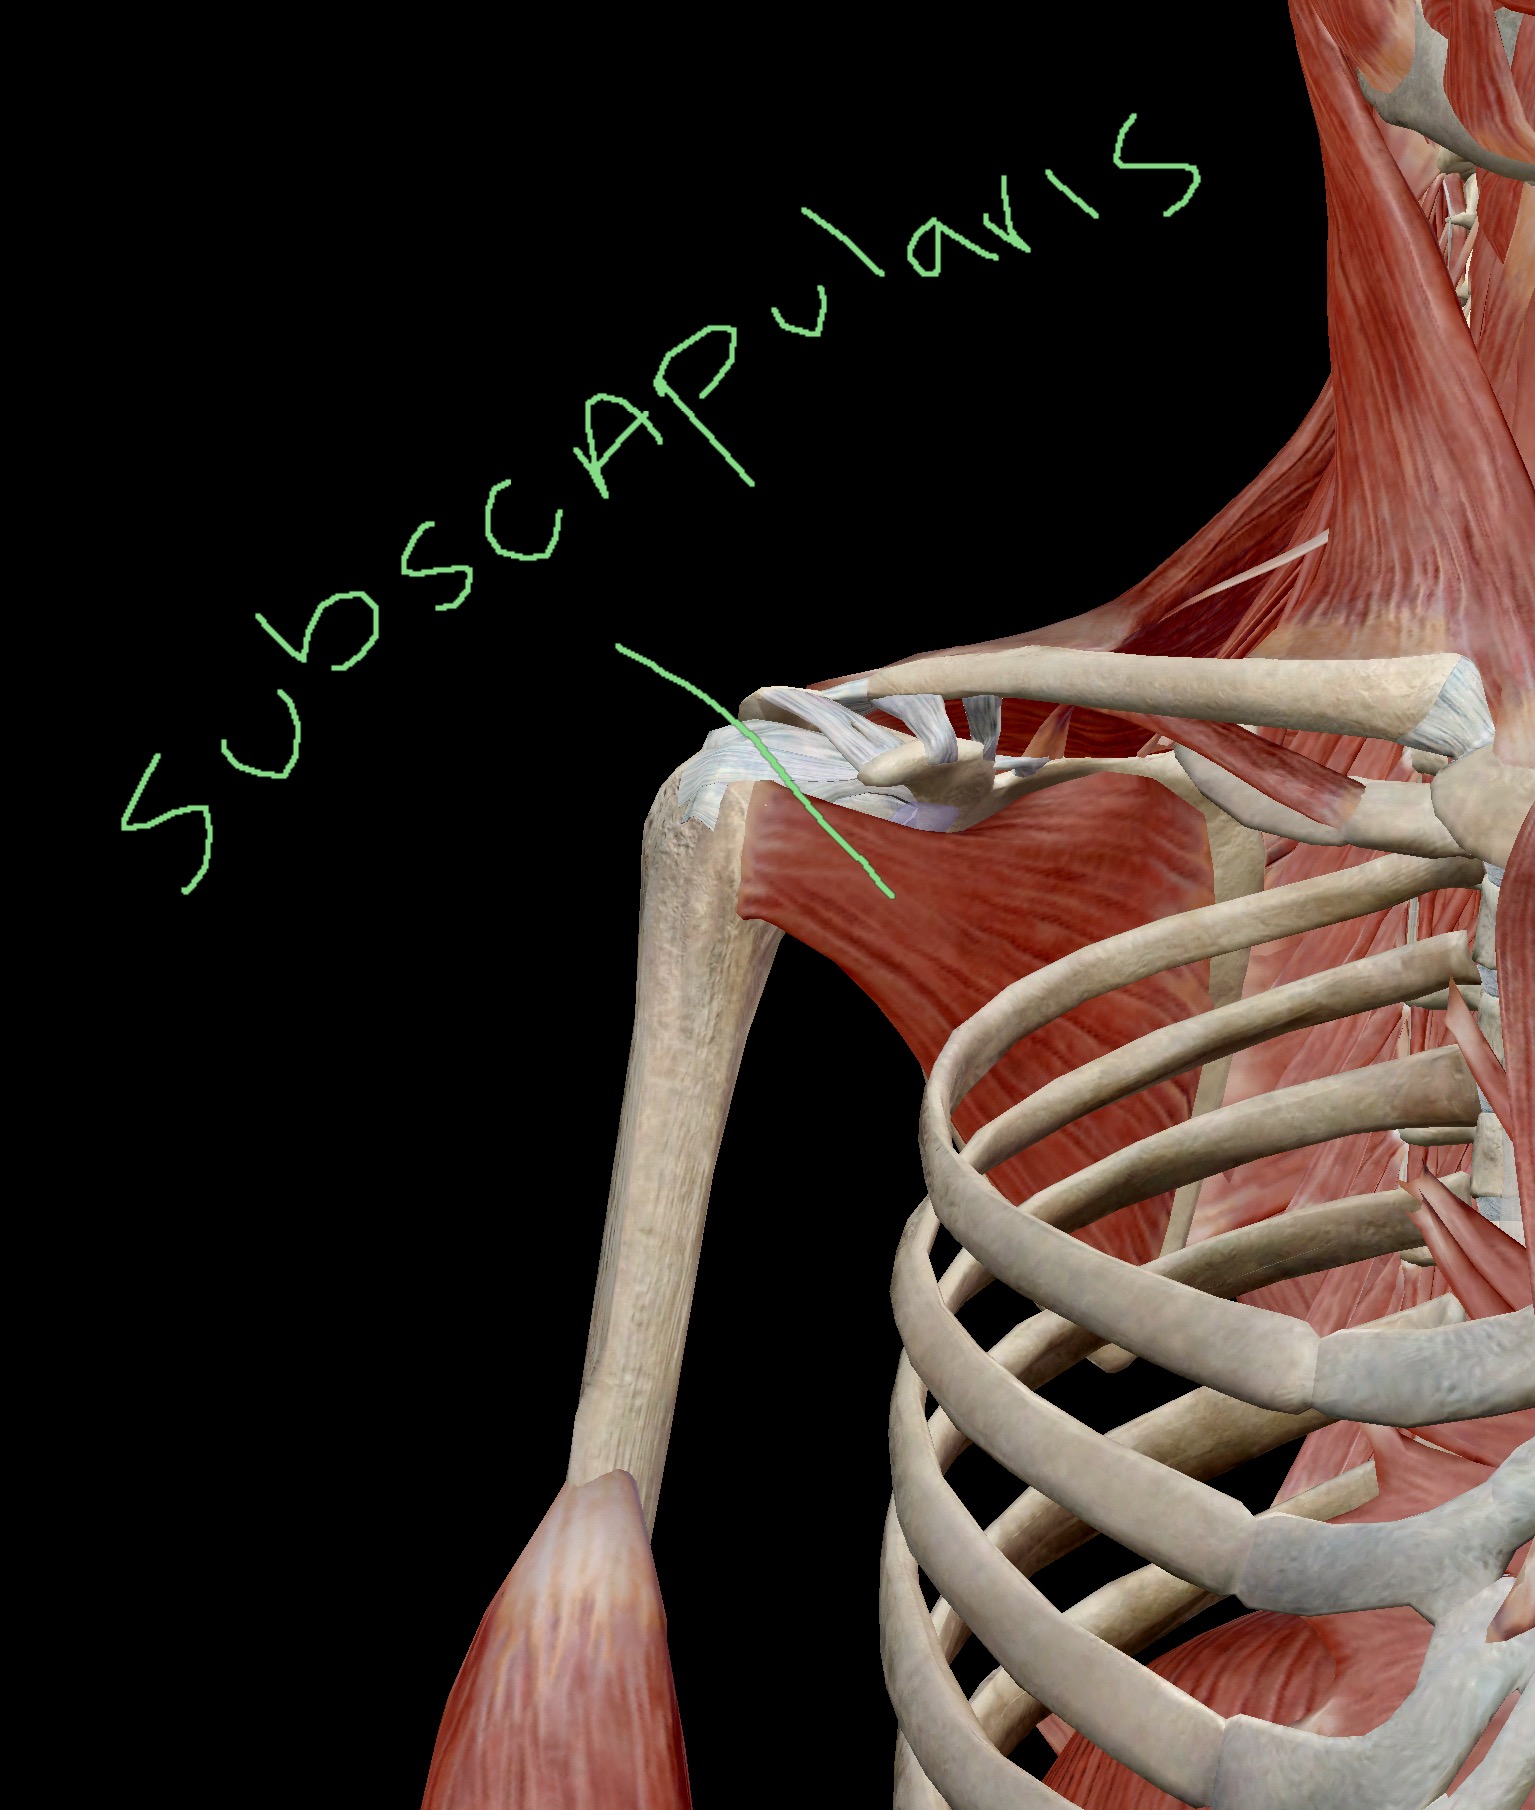 Subscapularis Muscle Muscle Anatomy Medical Anatomy Human Body Anatomy ...